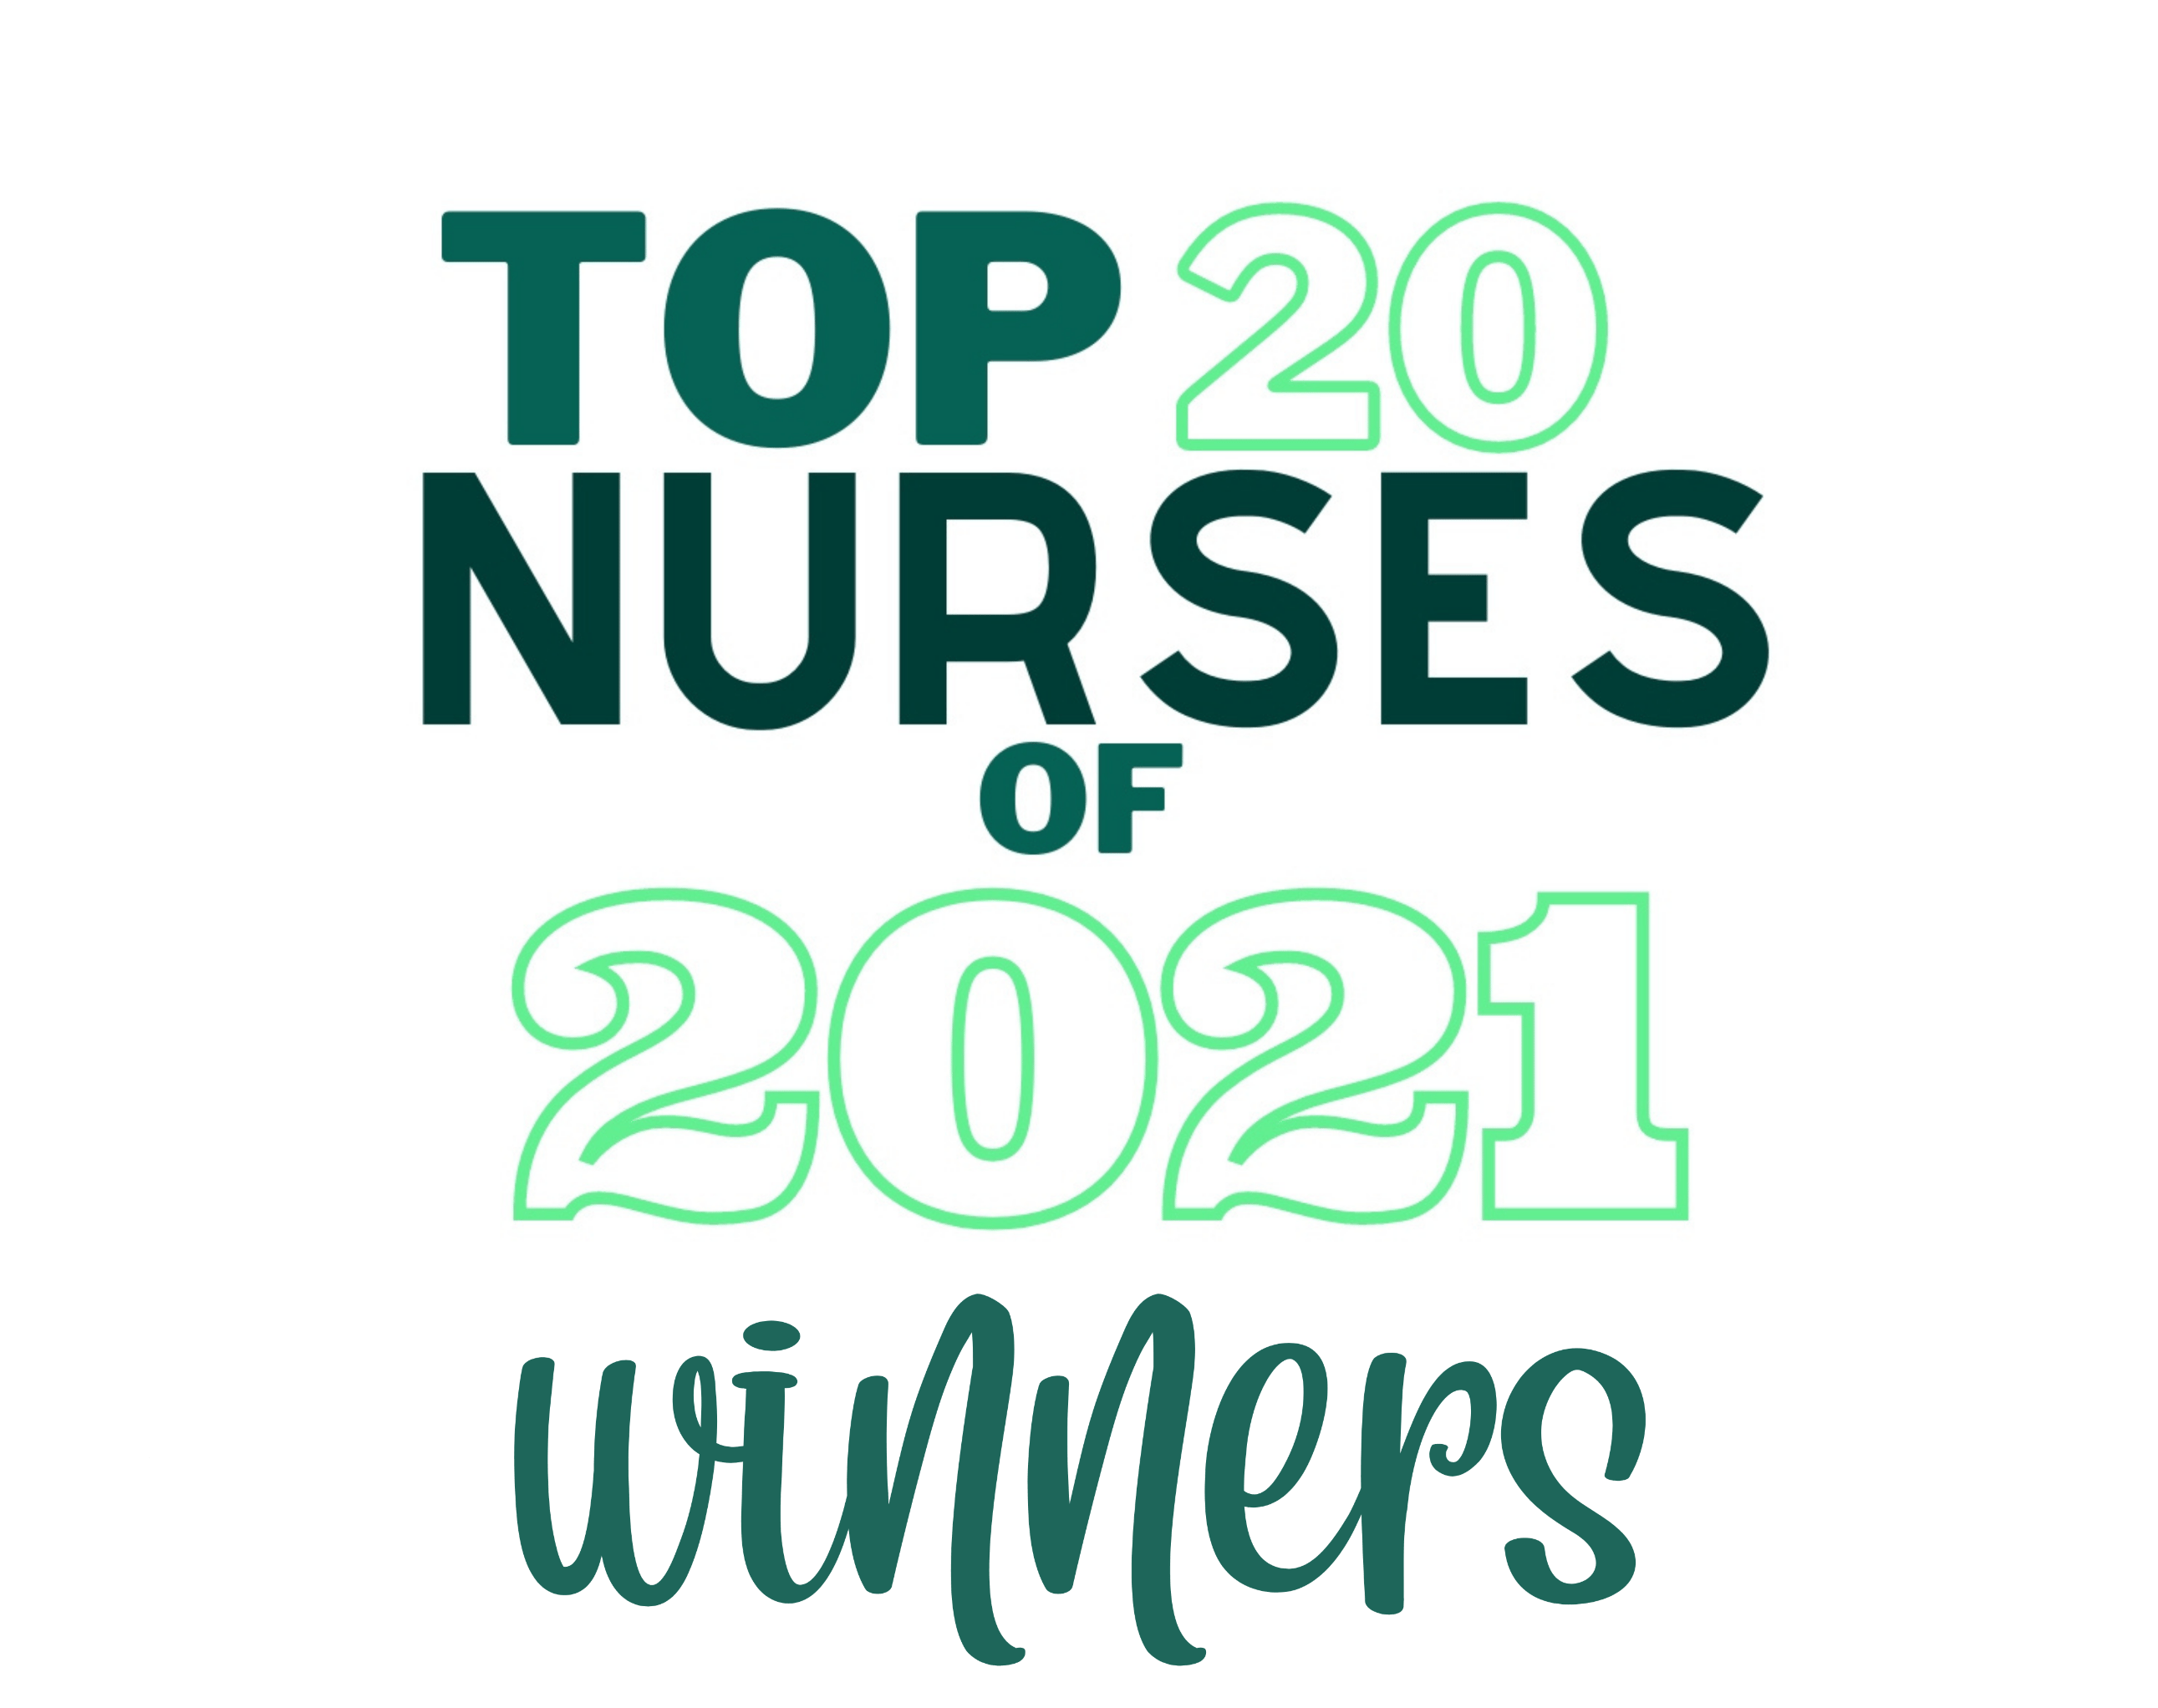 Announcing the Top 20 Nurses Award Winners of 2021